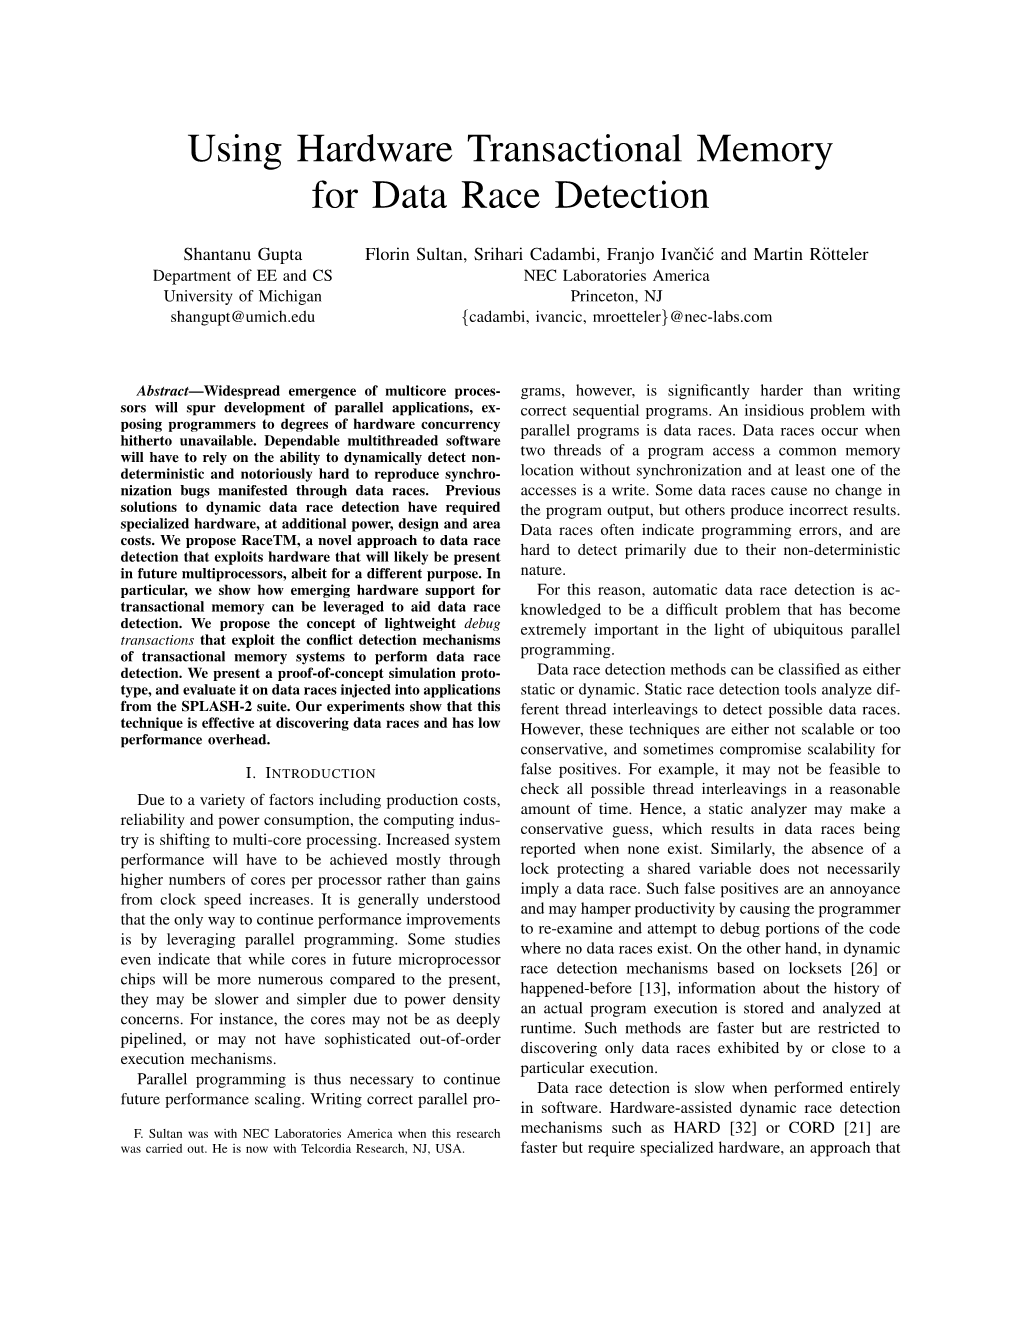 Using Hardware Transactional Memory for Data Race Detection